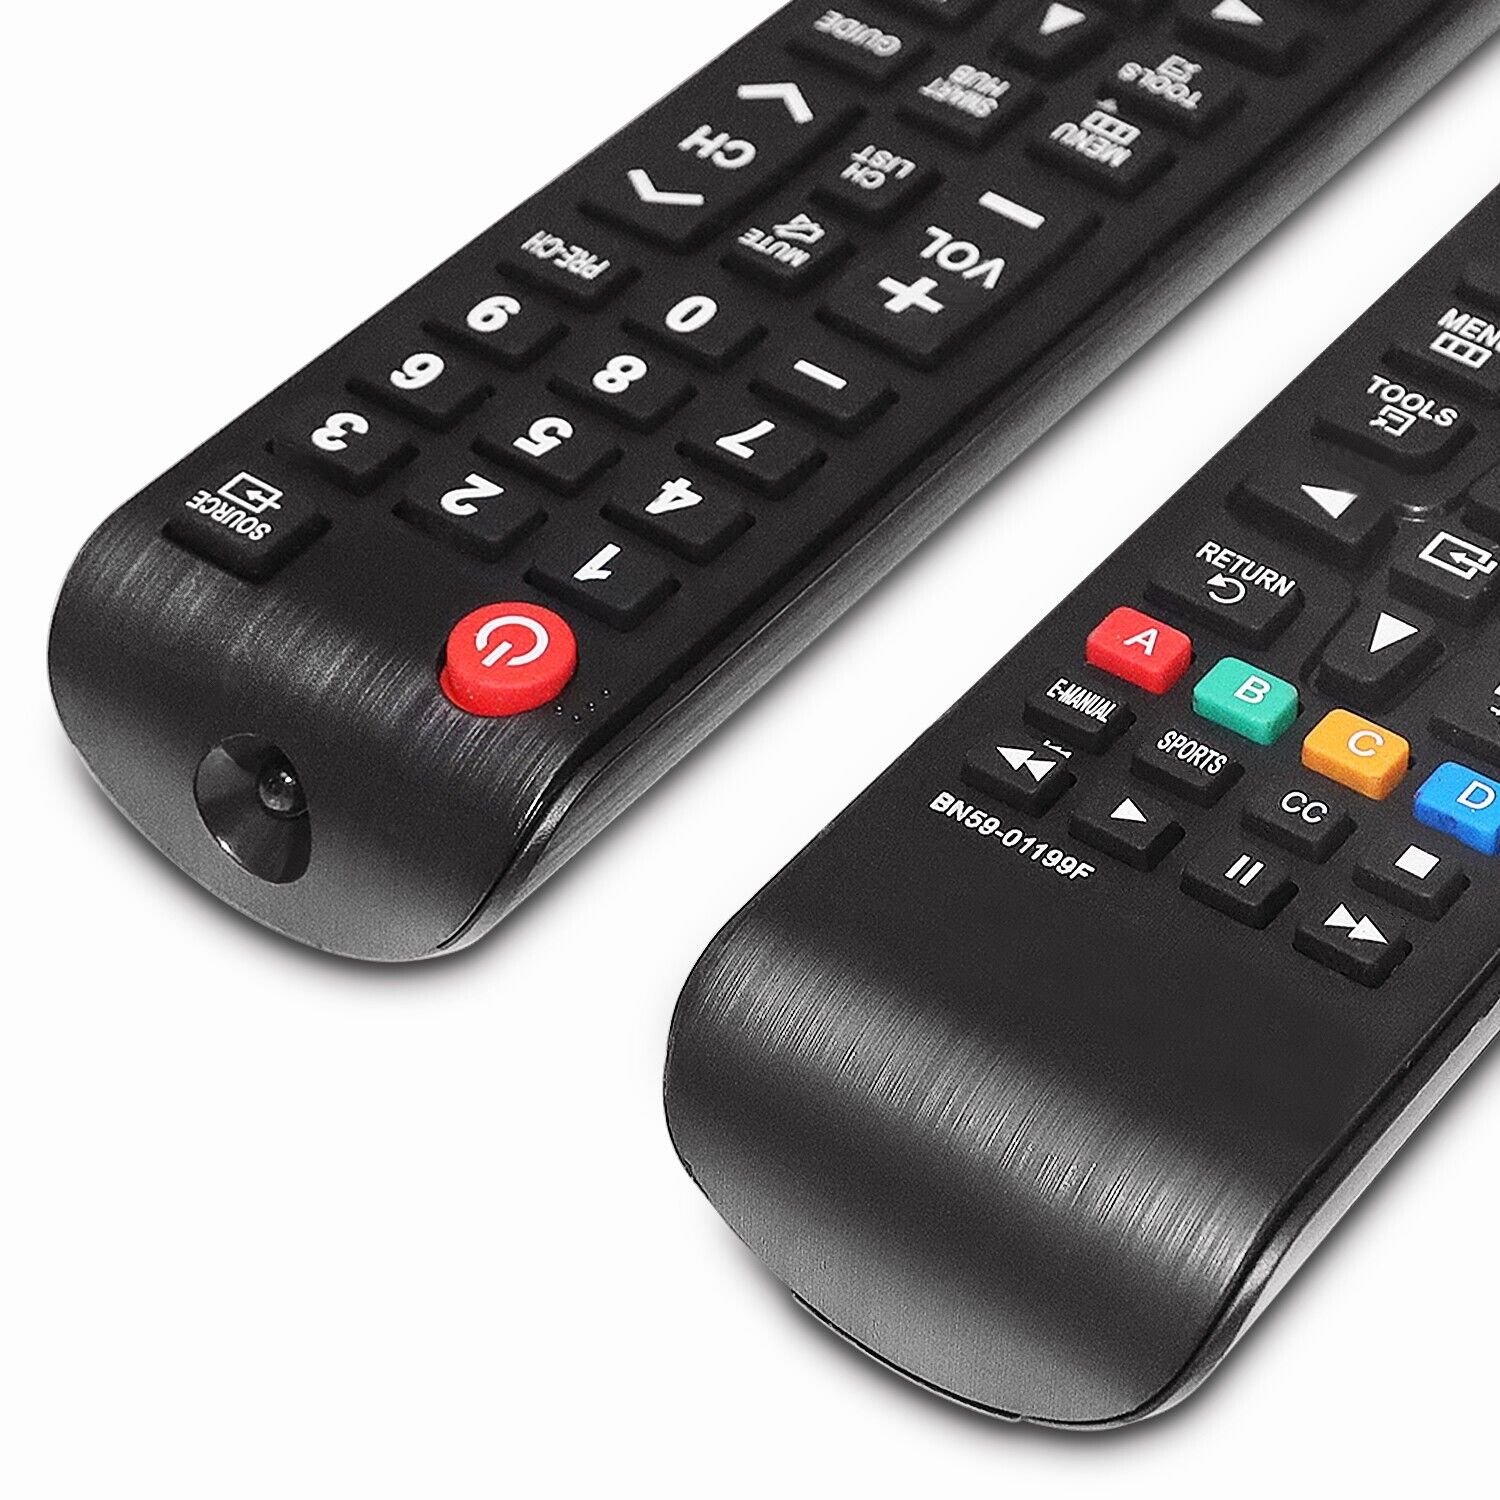 Samsung Remote Control (BN59-01301A) for Select Samsung TVs - Black